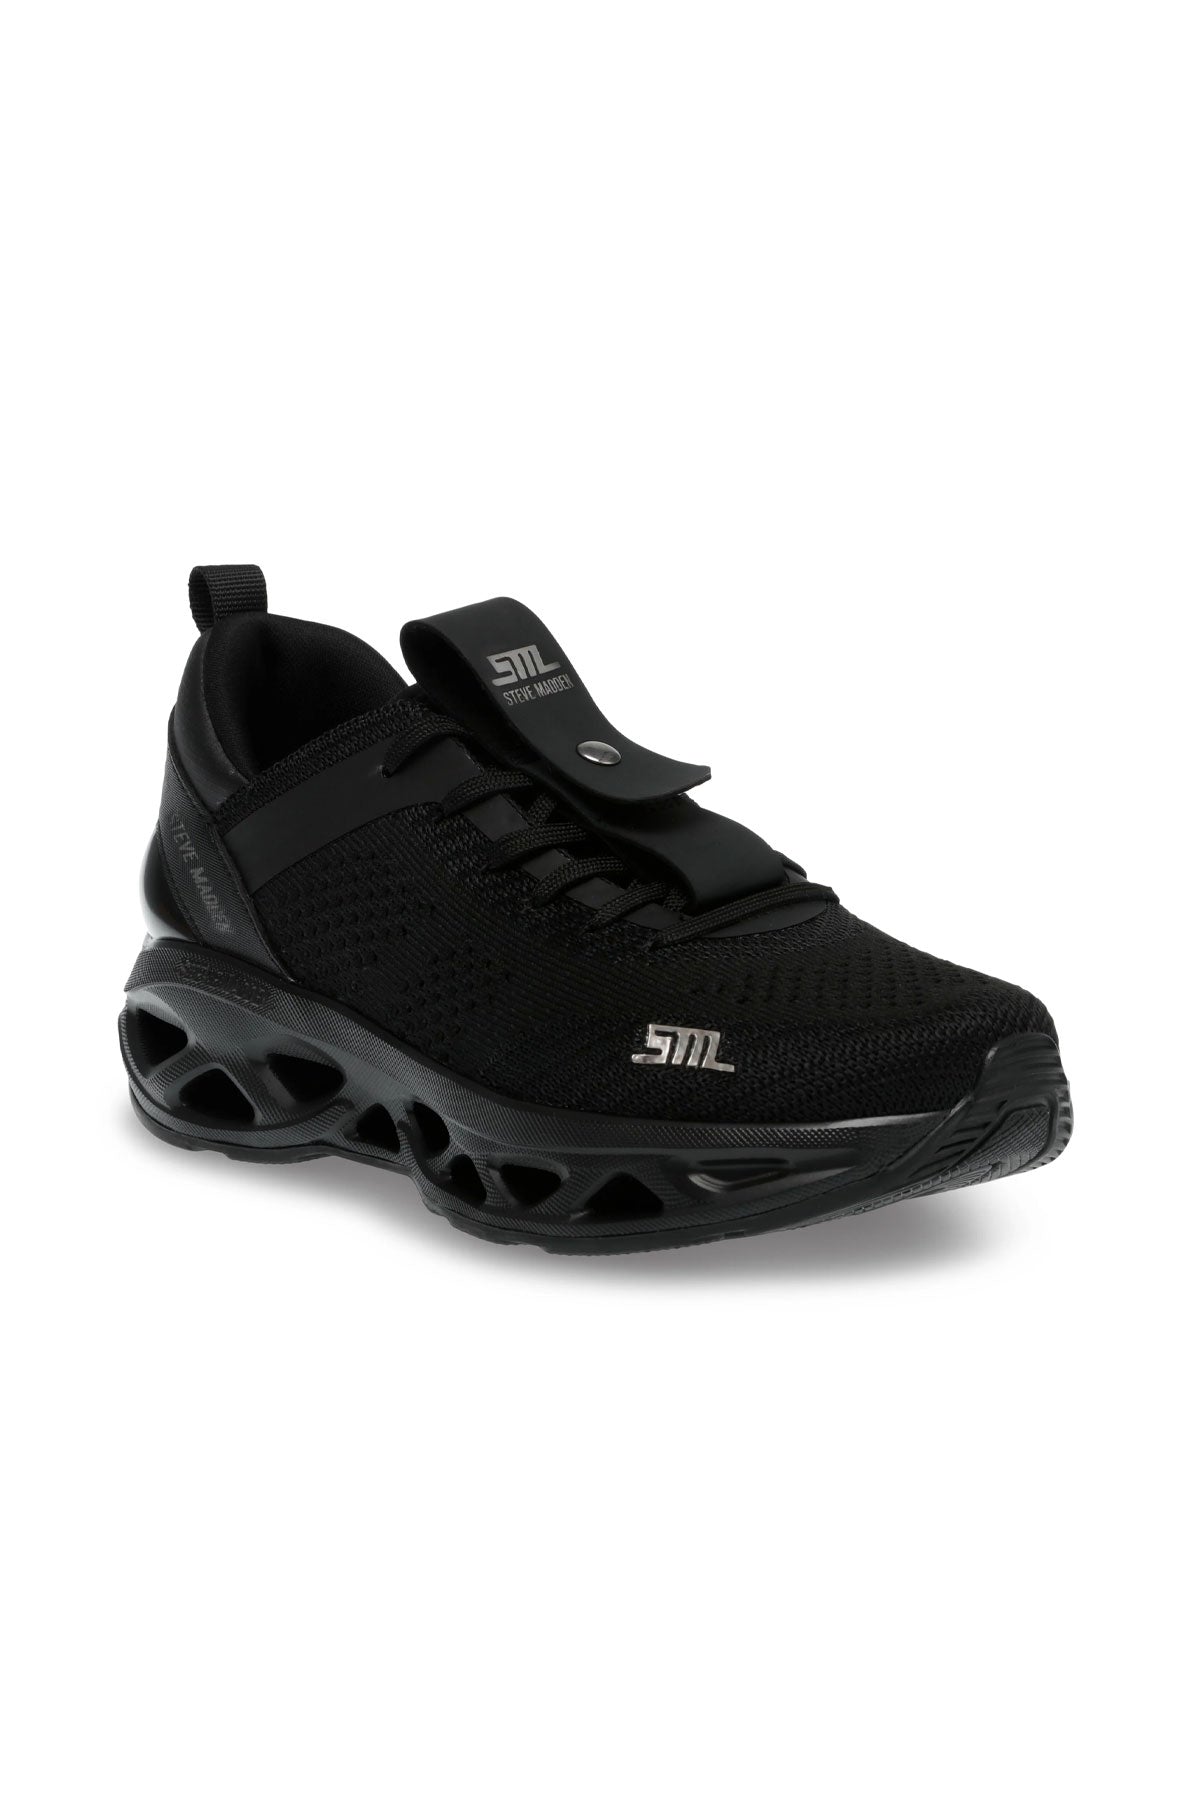 סטיב מאדן נעלי סניקרס Surge בצבע שחור לנשים-Steve Madden-36-נאקו